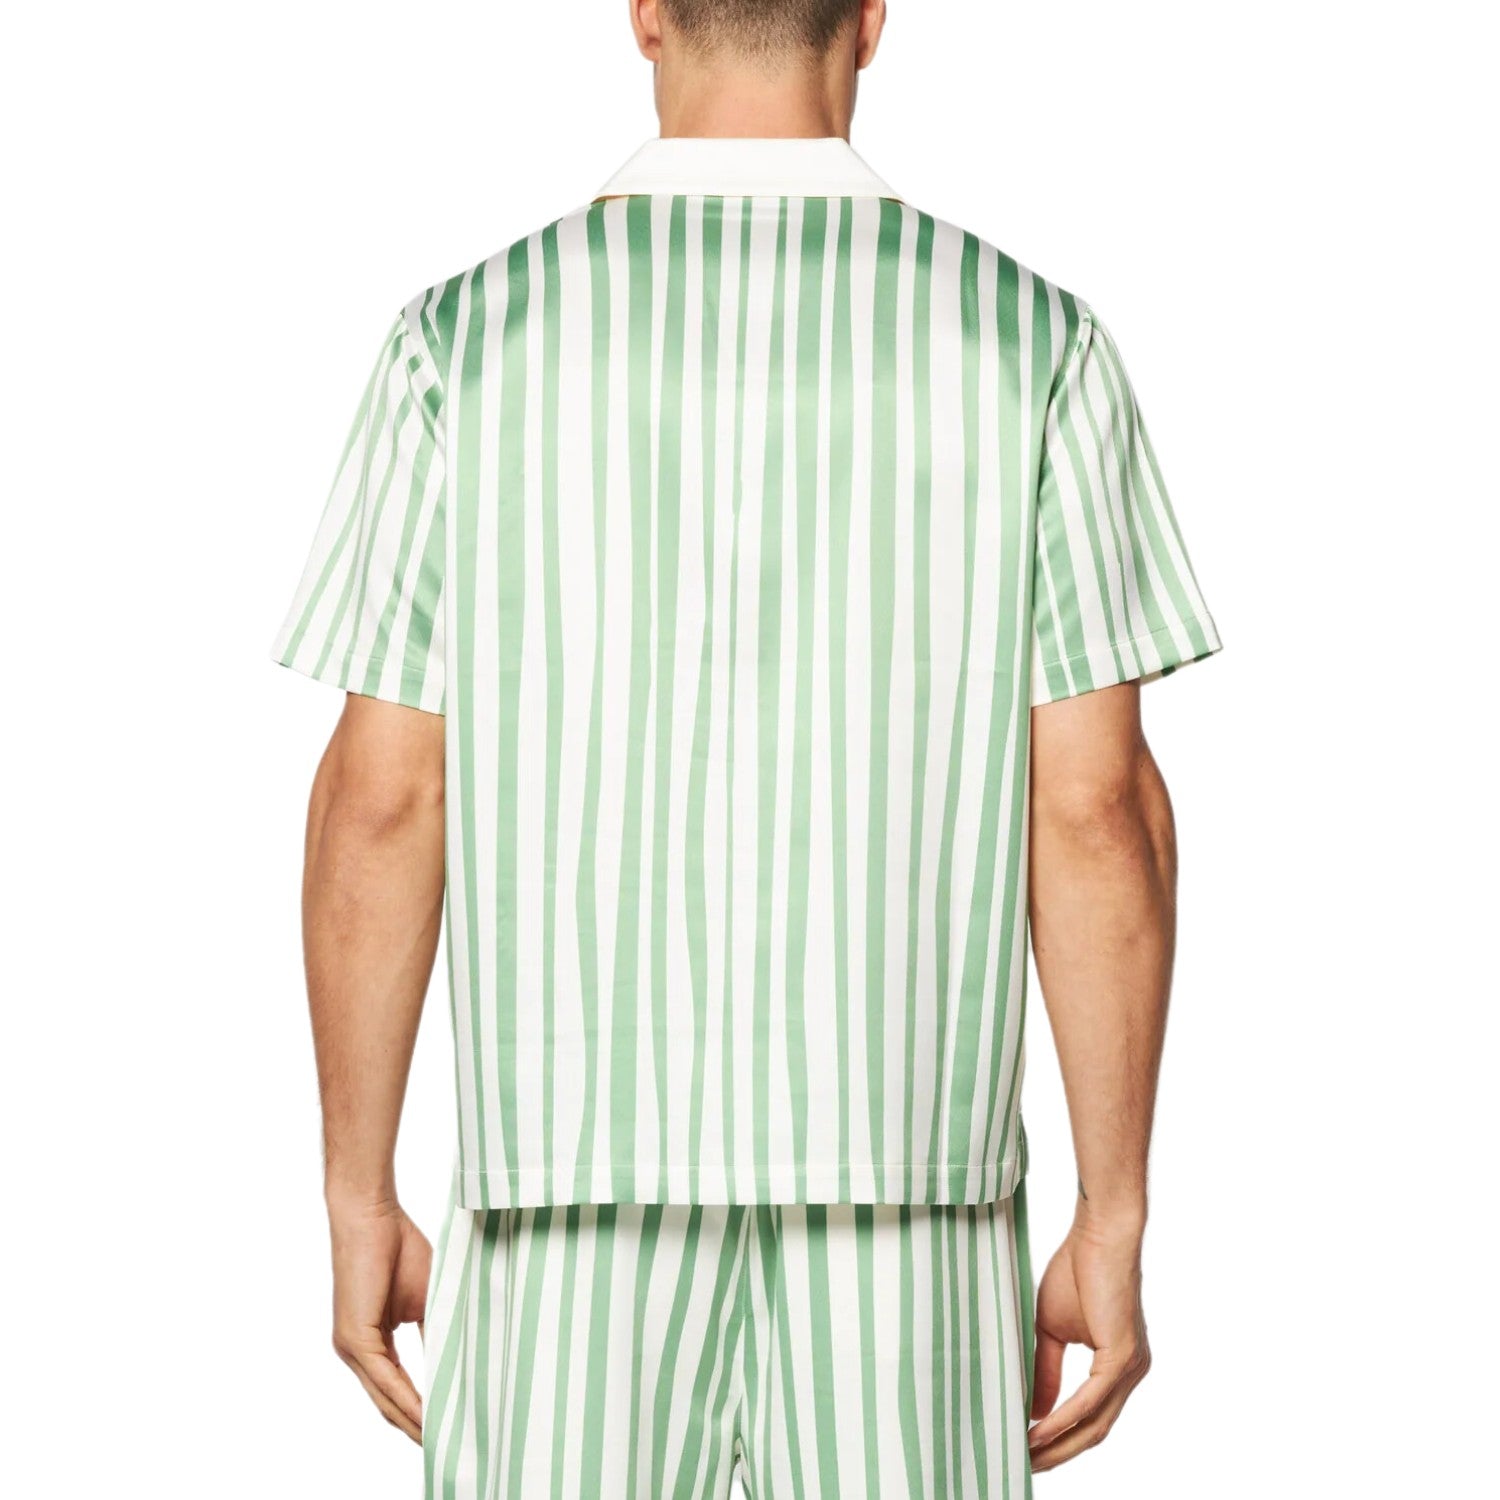 Sergio Tacchini Ella Printed Shirt Mens Style : Uks24m10130